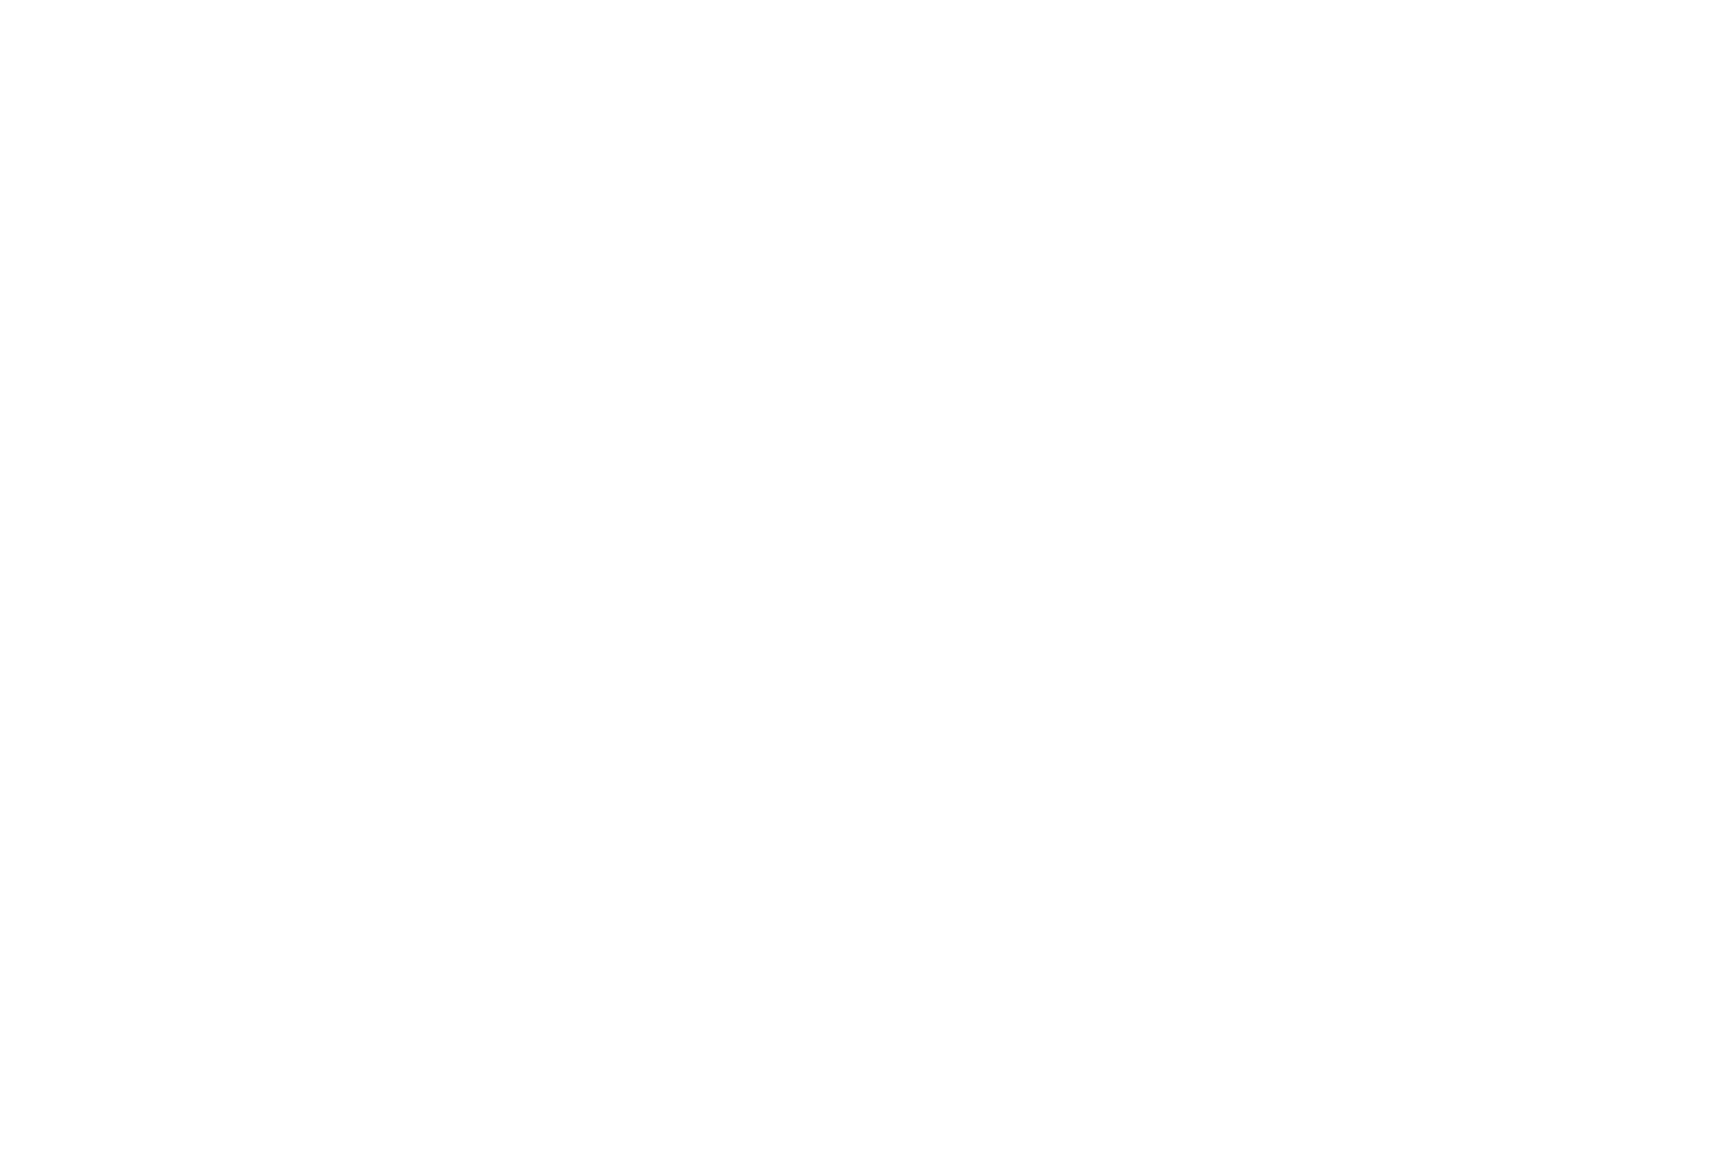 OFFICIAL SELECTION - Milan International Film Festival - 2019 (1).png